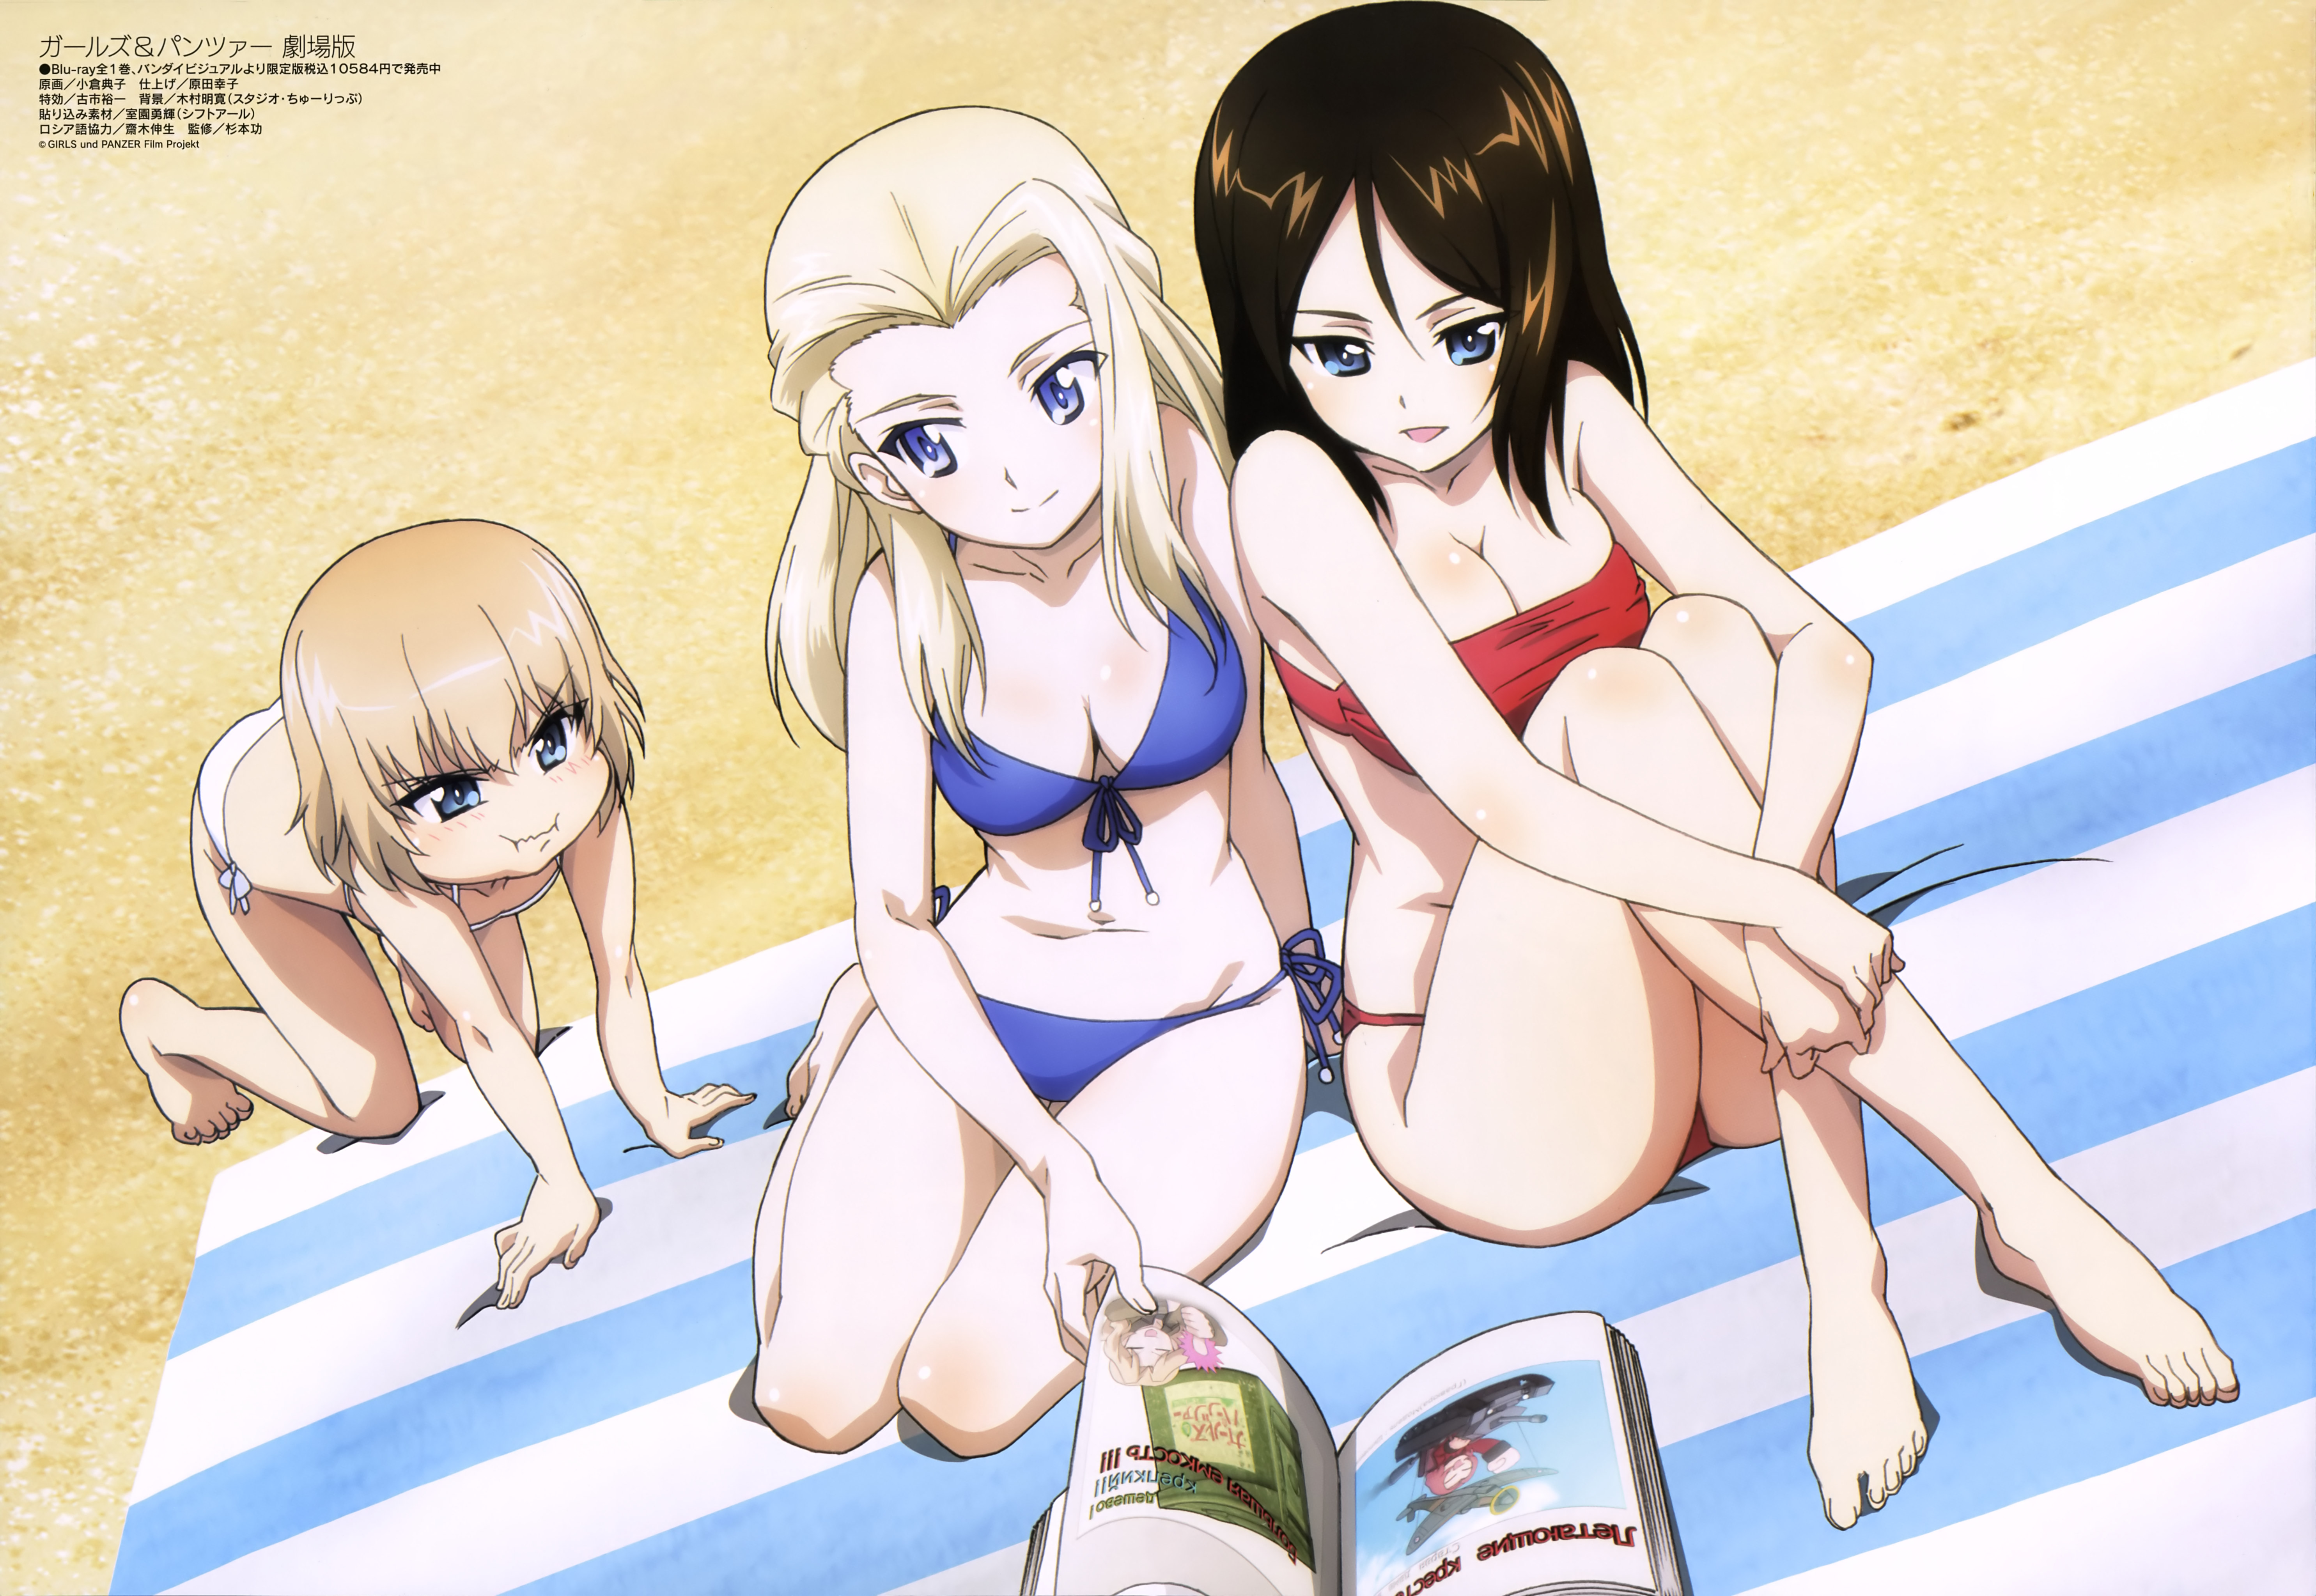 Anime 5939x4093 anime anime girls beach sand beach towel magazine blonde Girls und Panzer women on beach women trio bikini books